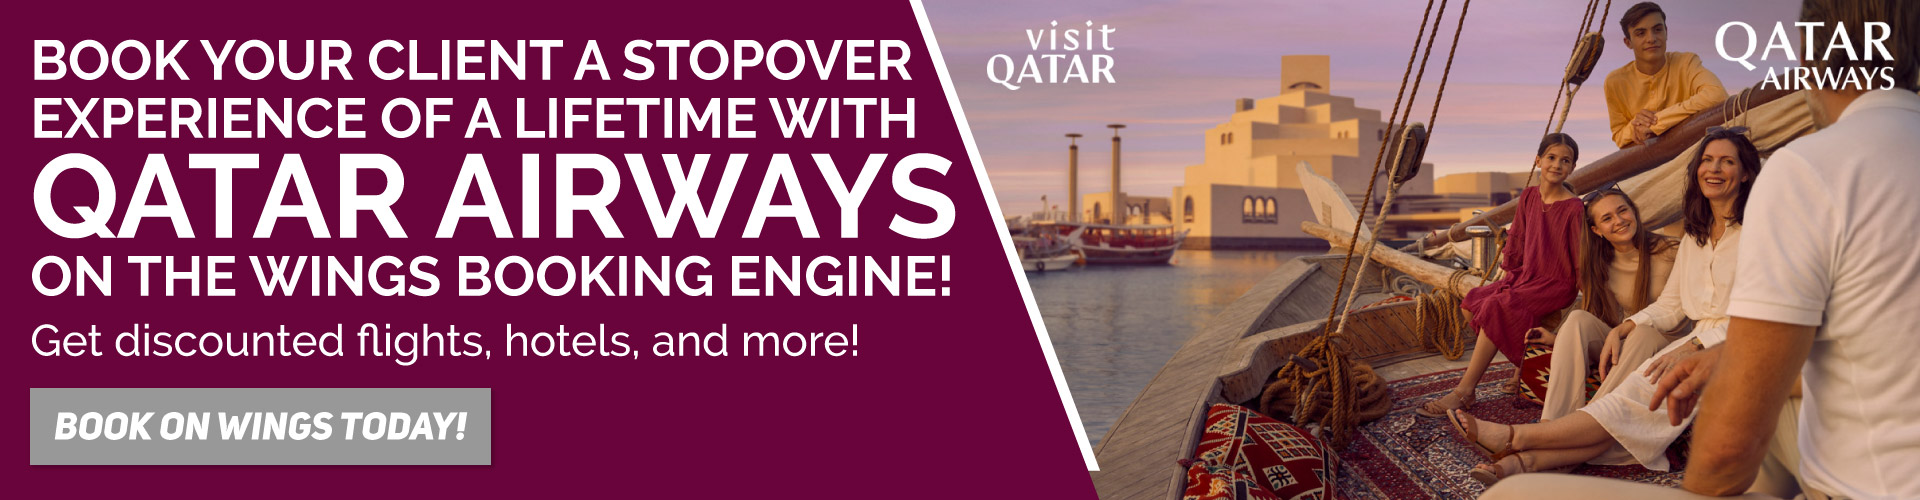 Sky Bird Qatar Airways Doha campaign Sky Bird Homepage Banner